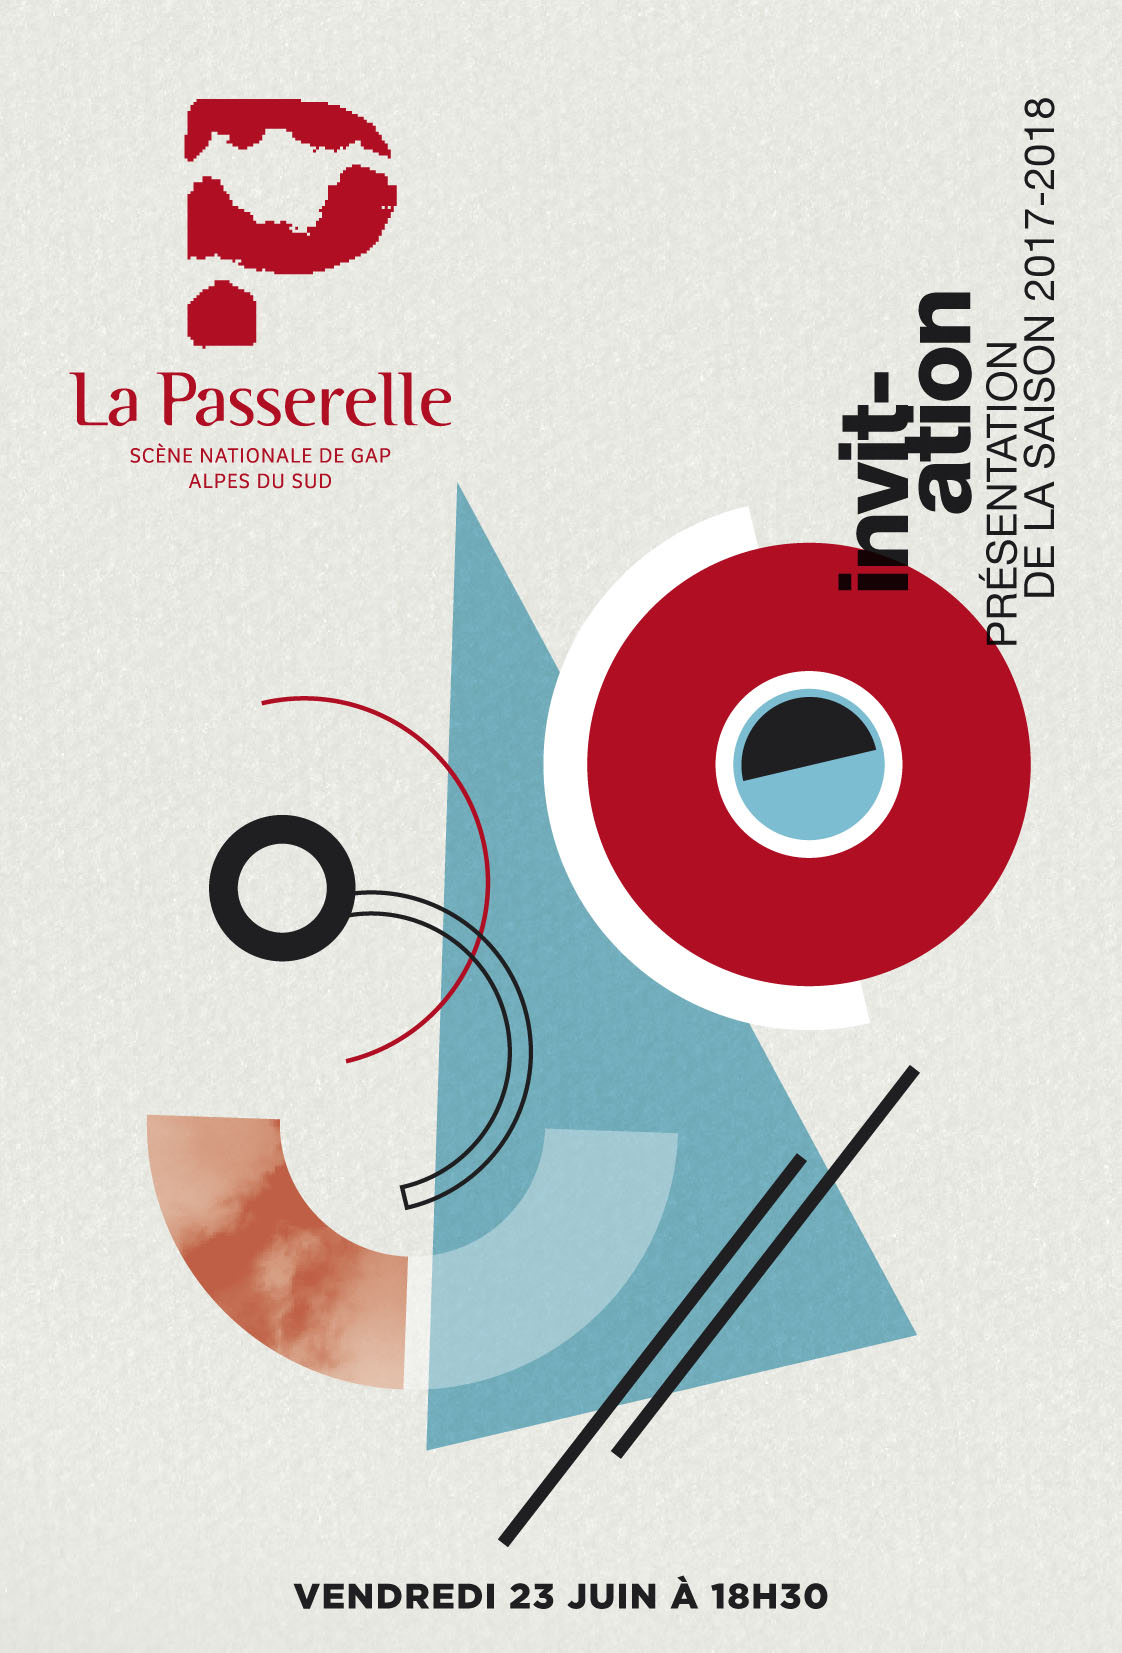 Philippe Ariagno programmation la Passerelle saison 2017.2018 (1re partie)